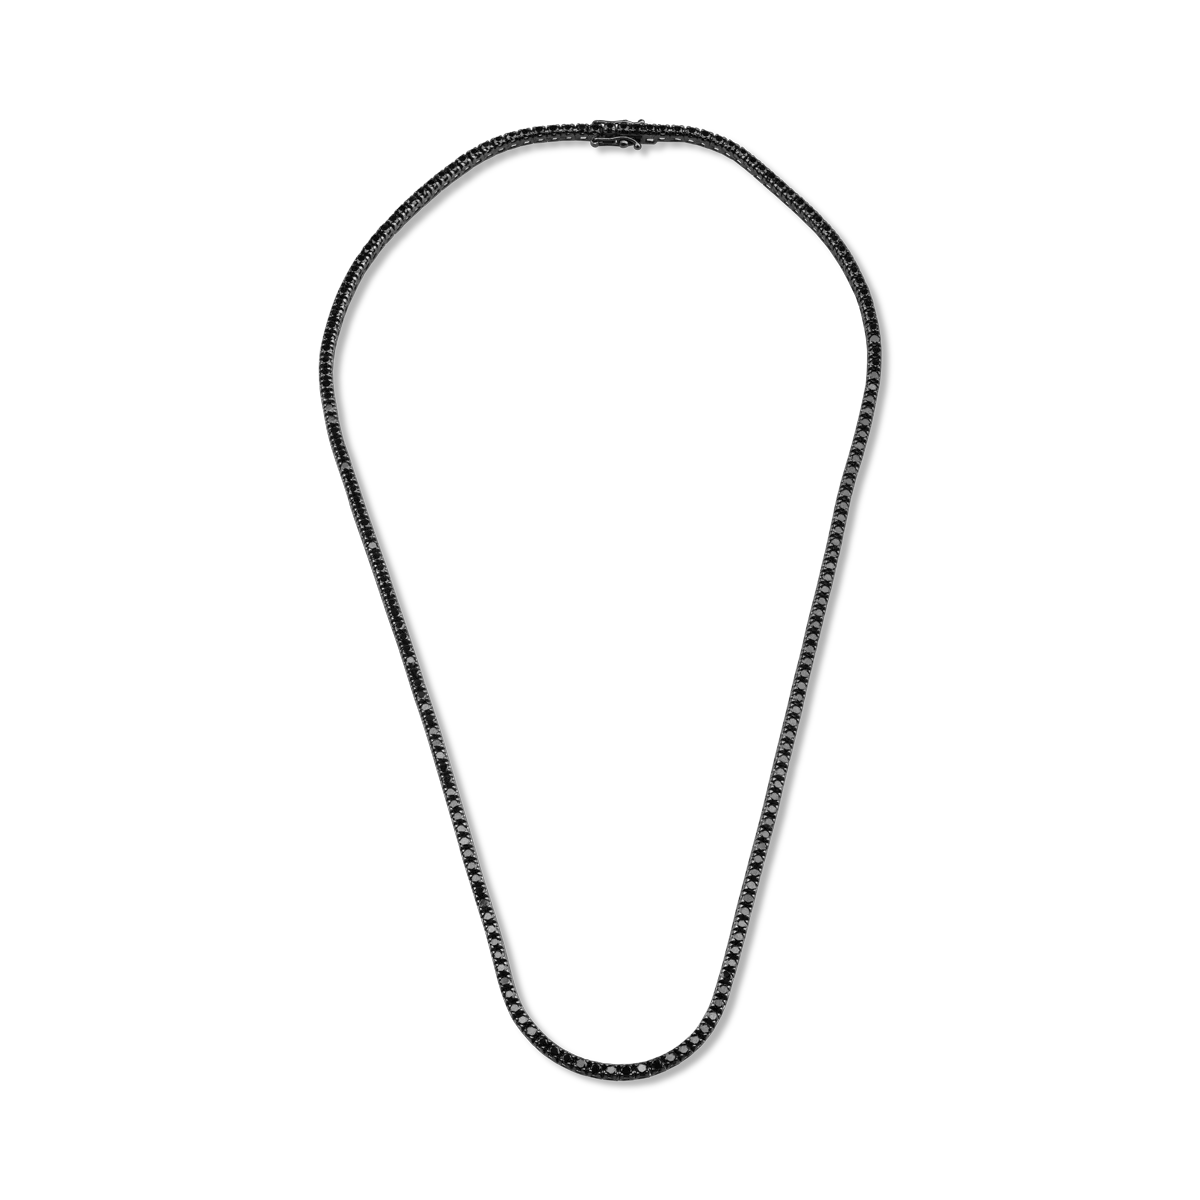 18K black gold tennis necklace with 1.28ct black diamonds